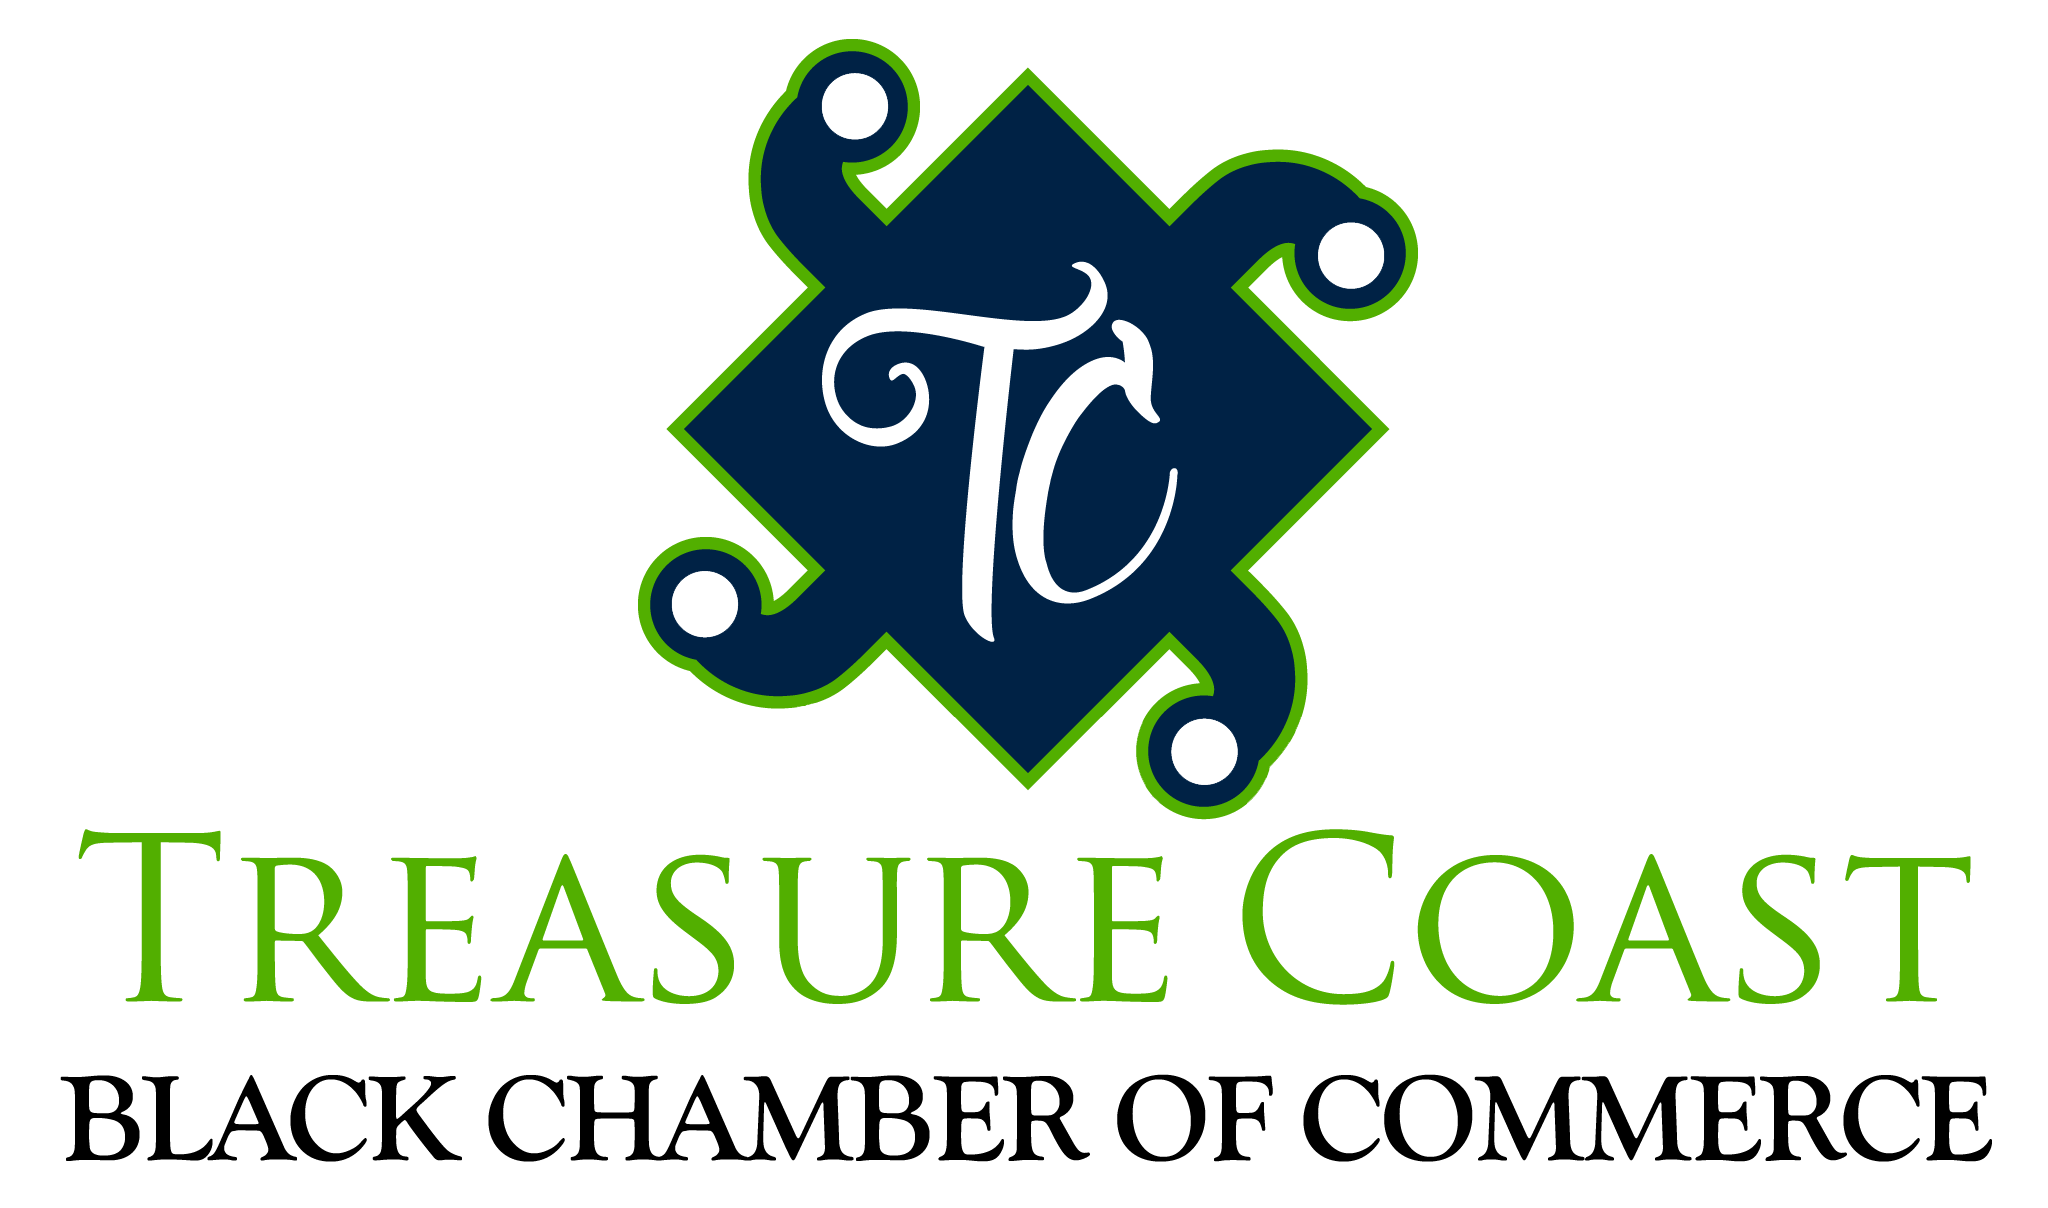 Treasure Coast Black Chamber of Commerce